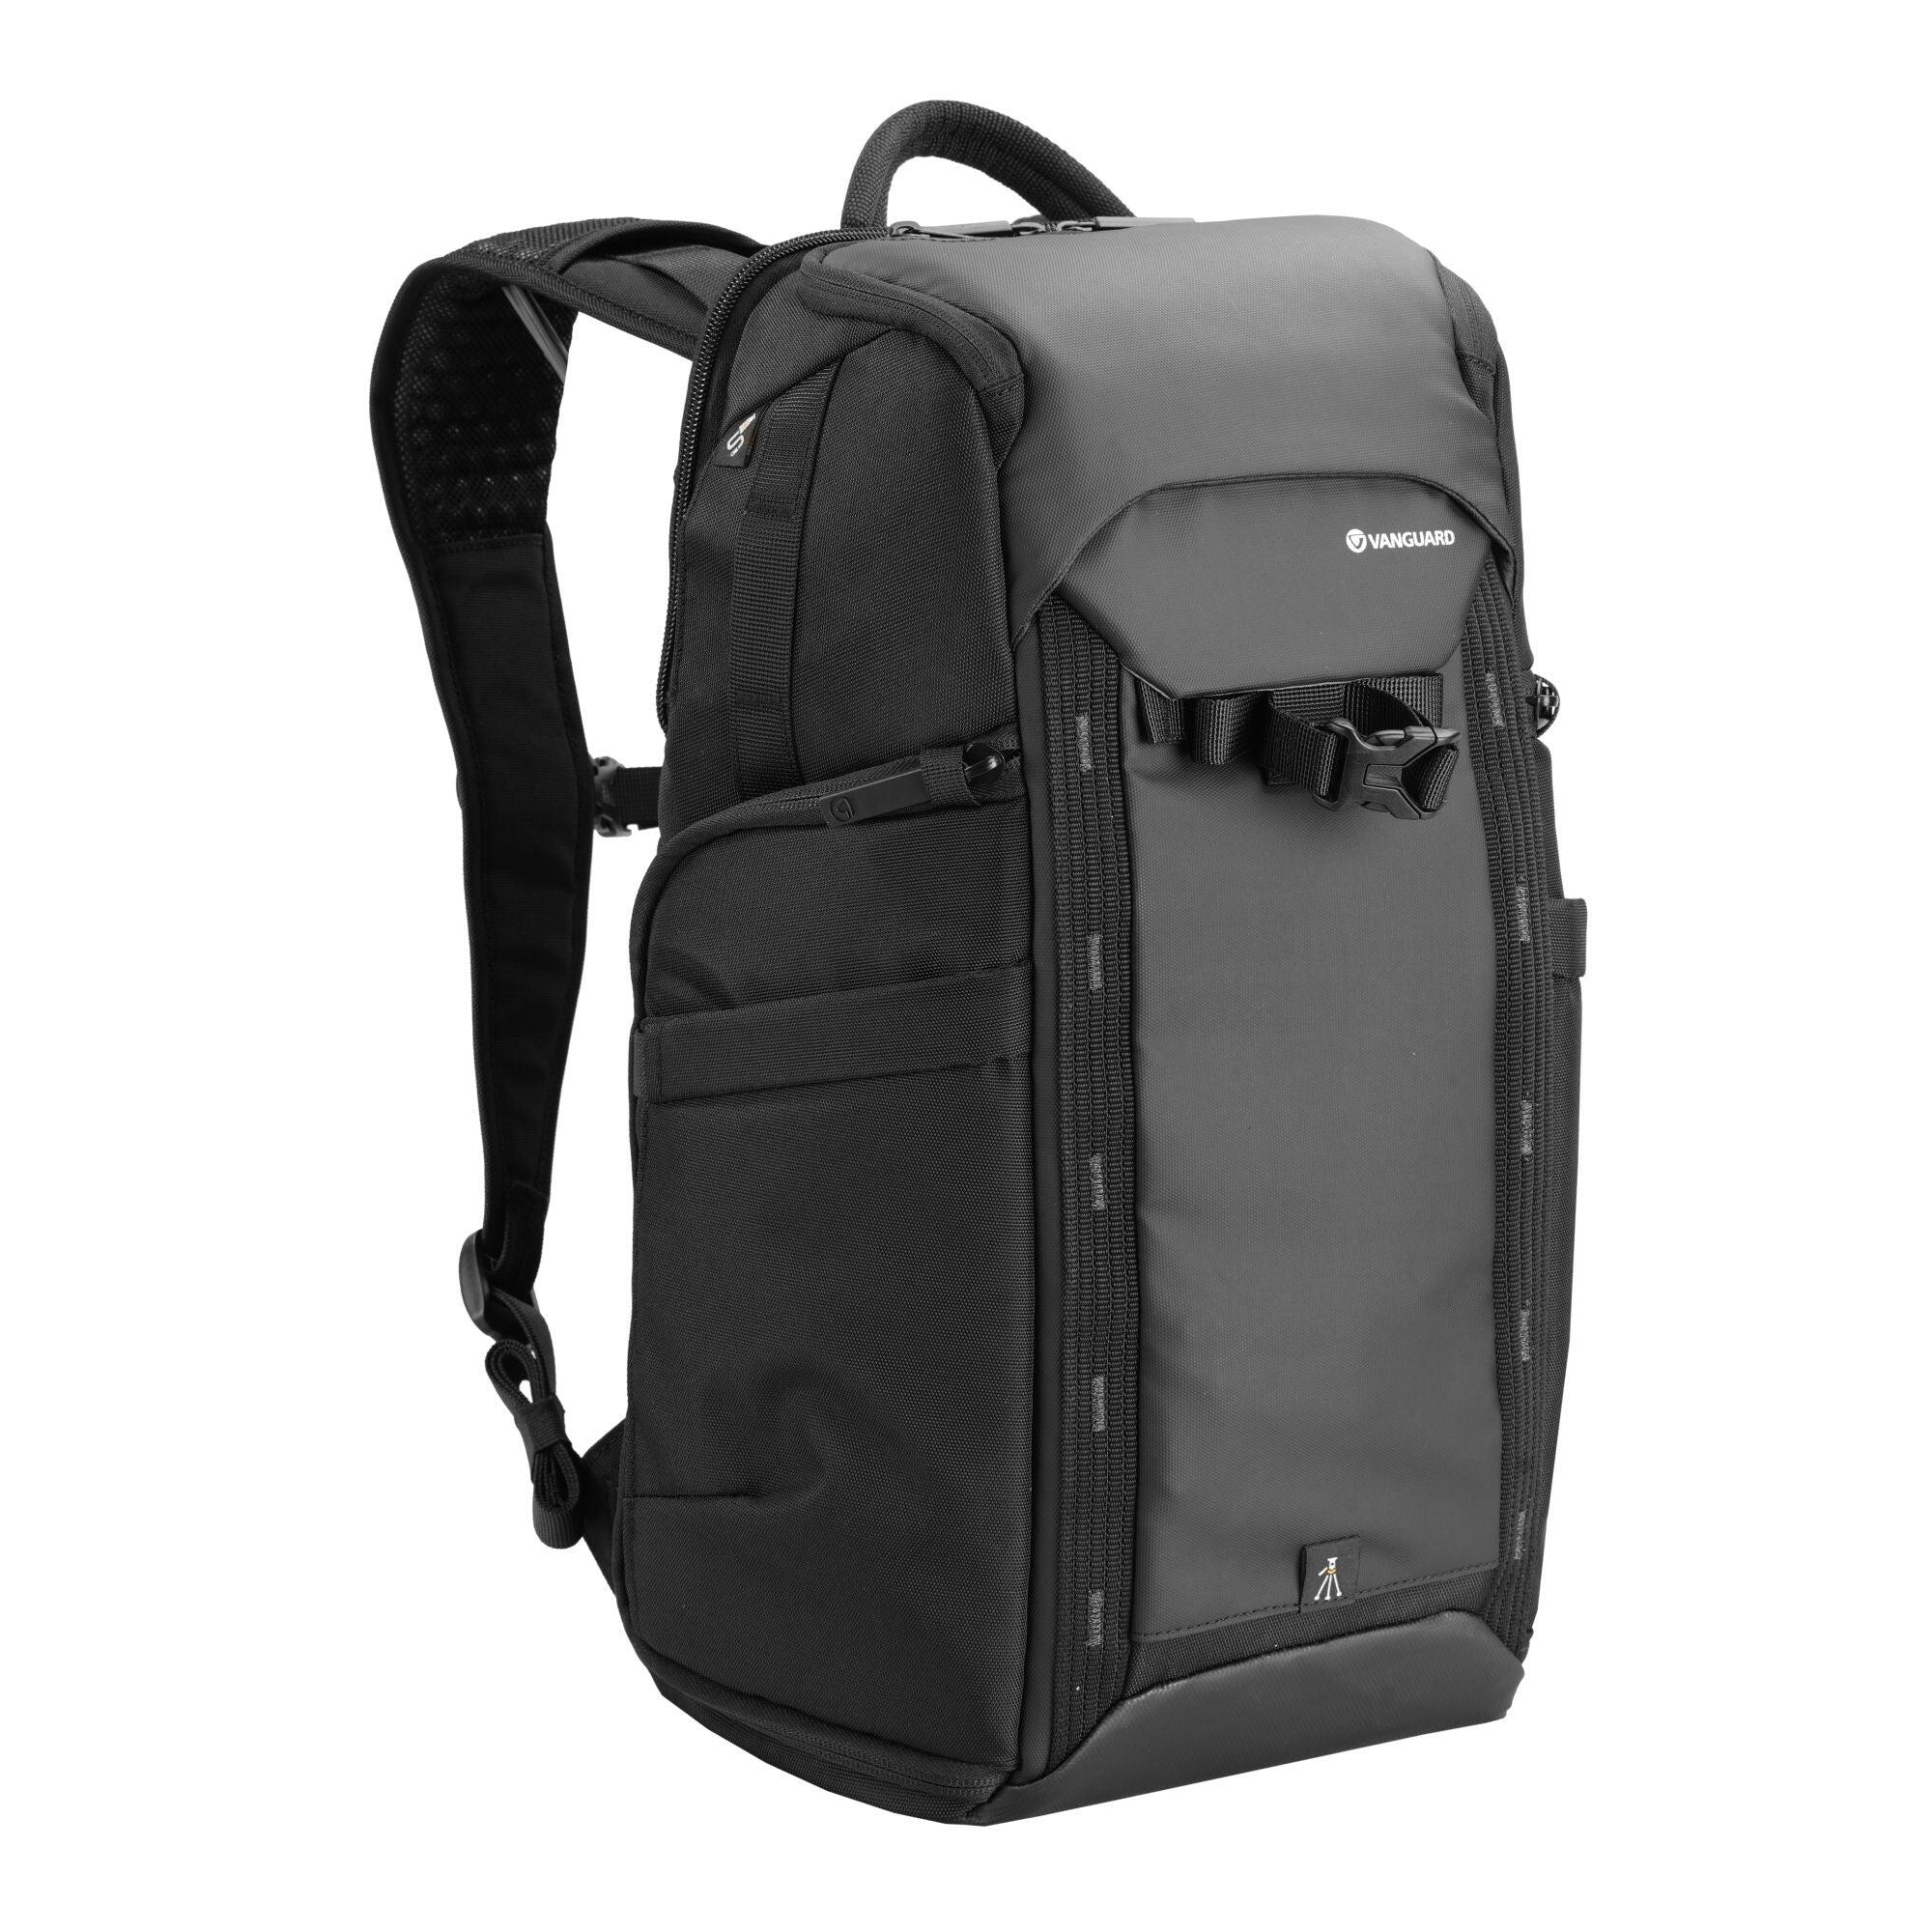 VEO ADAPTOR R44 BK Camera Backpack with USB Port - Black 2/5